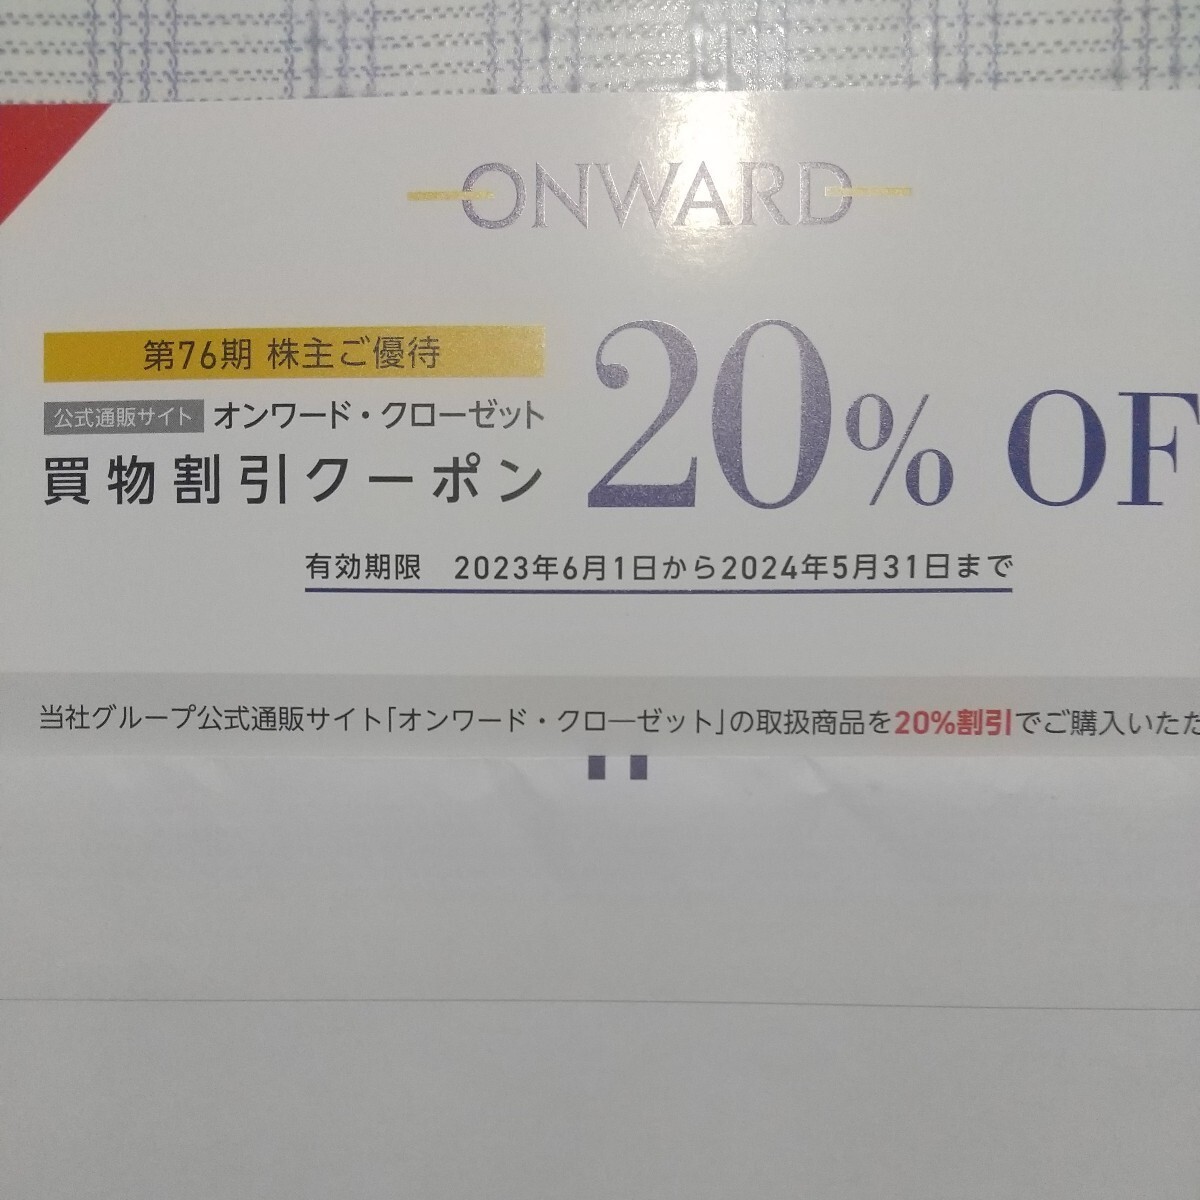 ONWARD クローゼット株主優待、20%offコード通知_画像1